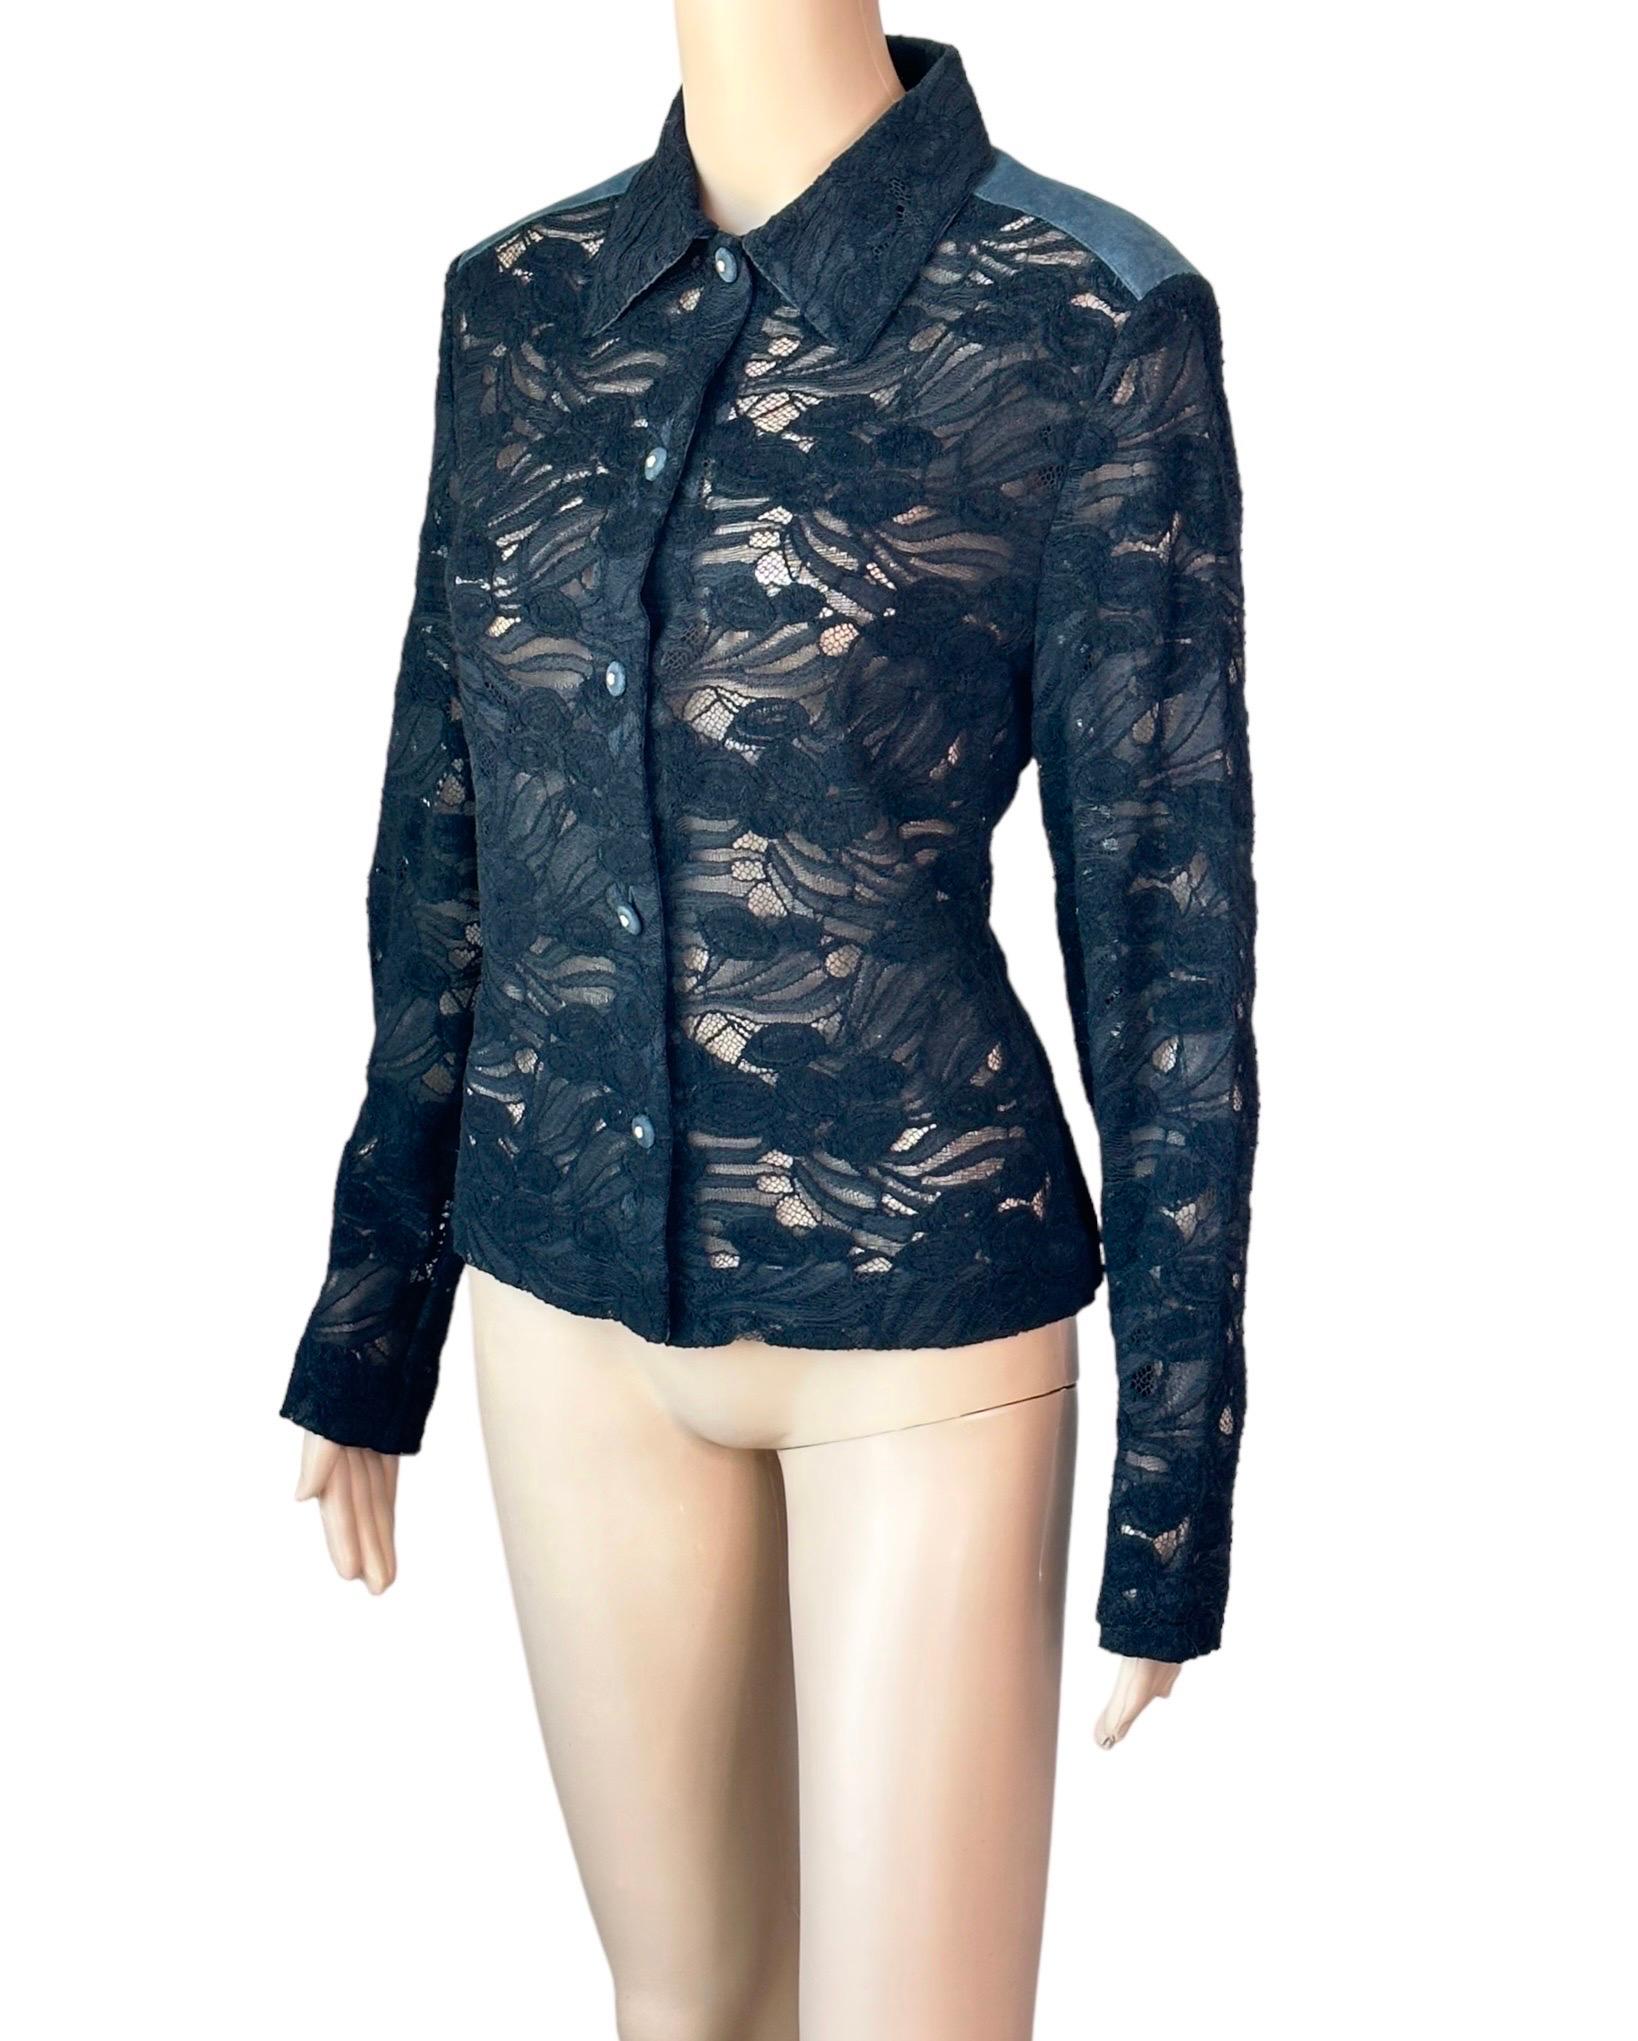 Gianni Versace c.2001 Vintage Lace Sheer Black Shirt Top Jacket For Sale 1